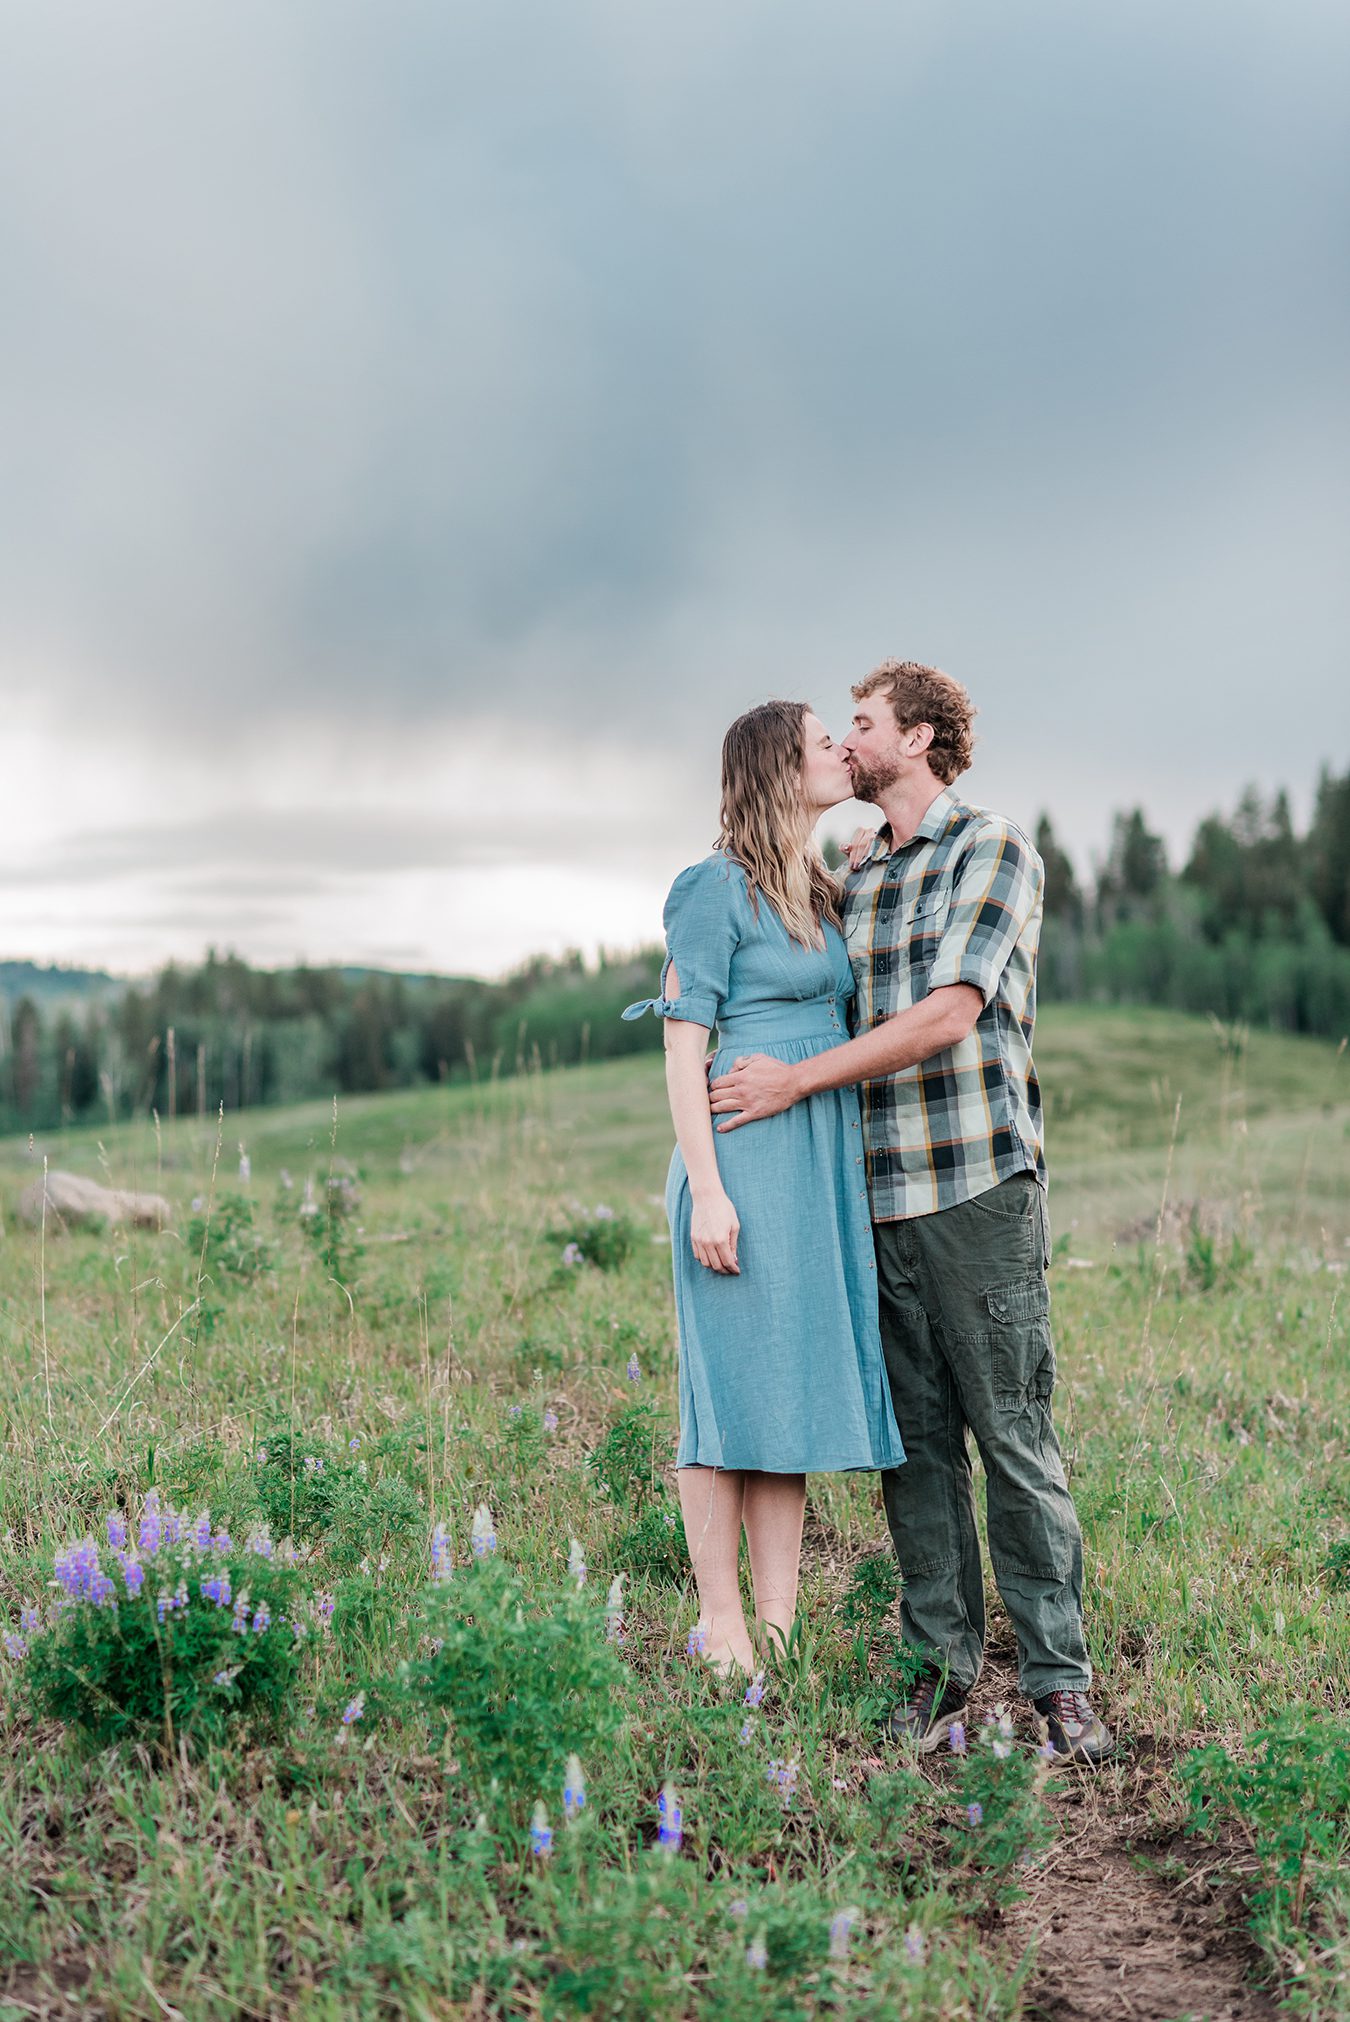 Annie & Taylor | Glenwood Springs Engagement Photos